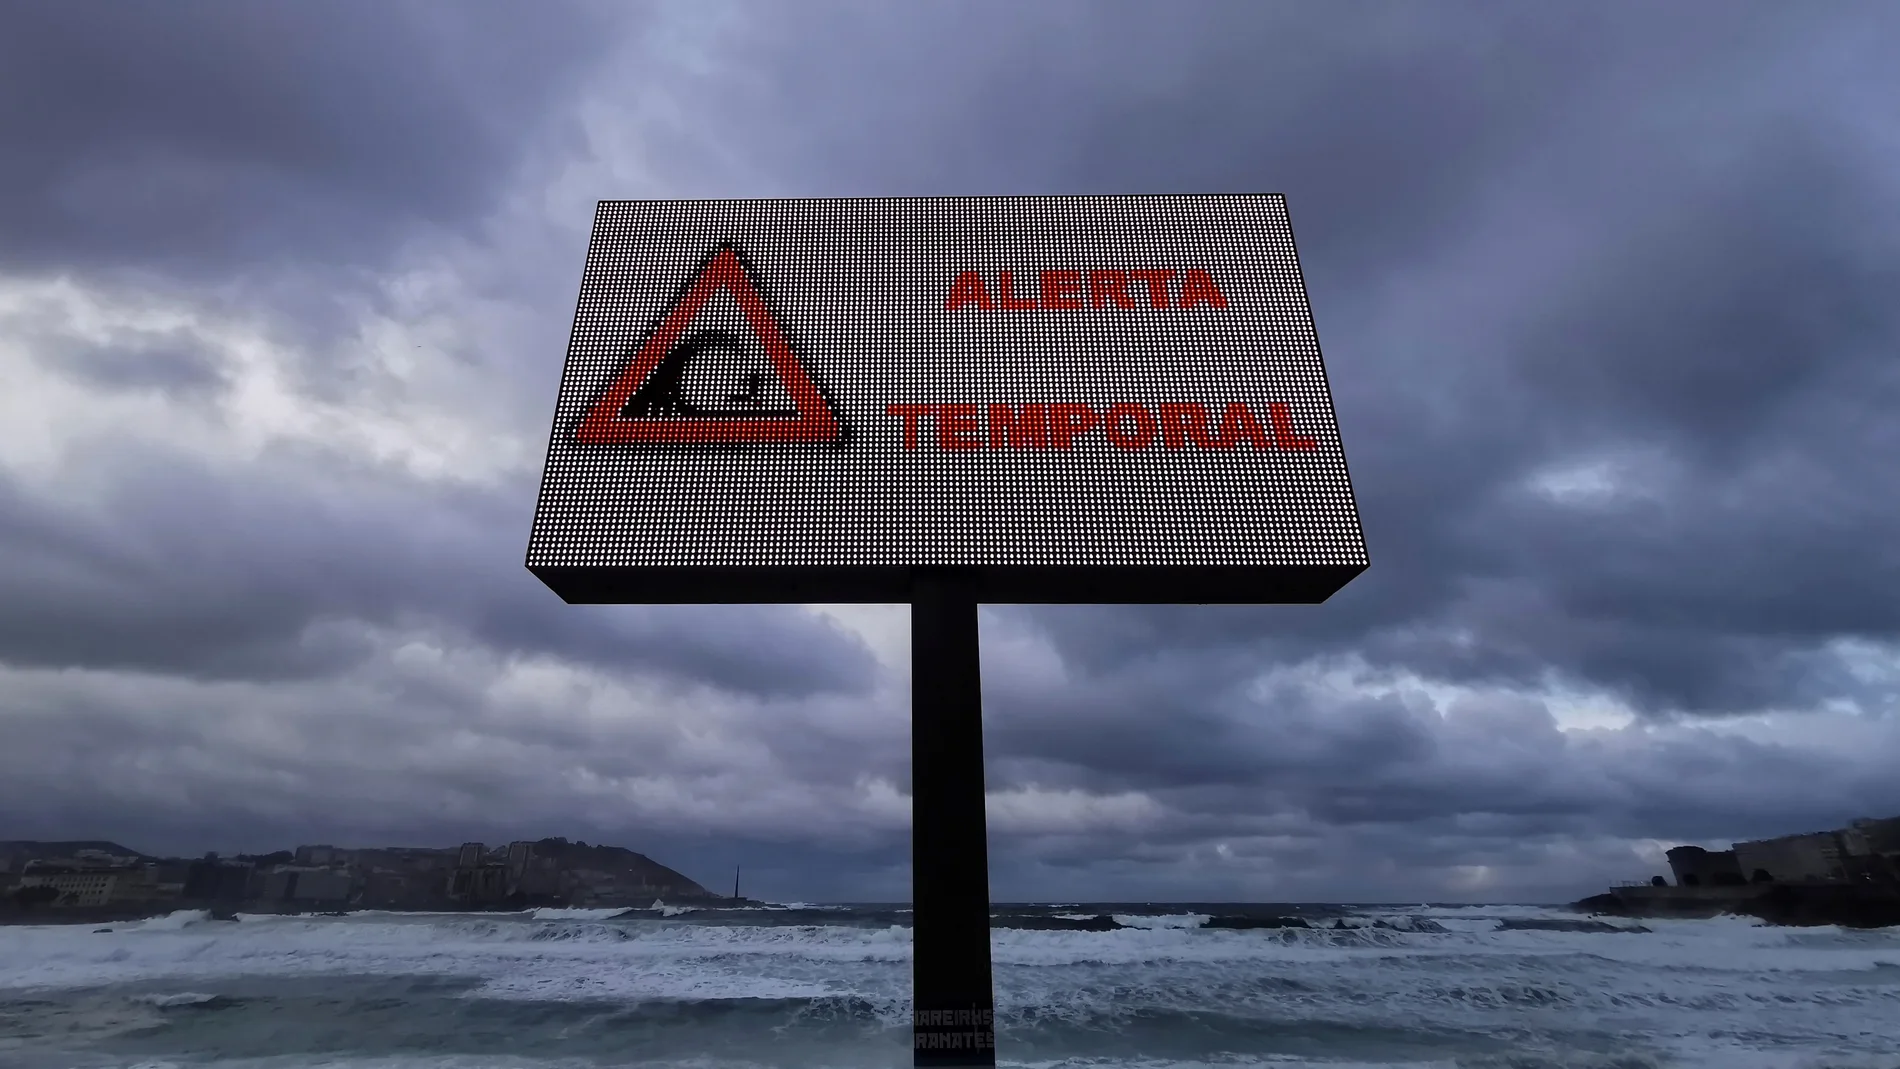 En Galicia hay aviso rojo por intenso oleaj